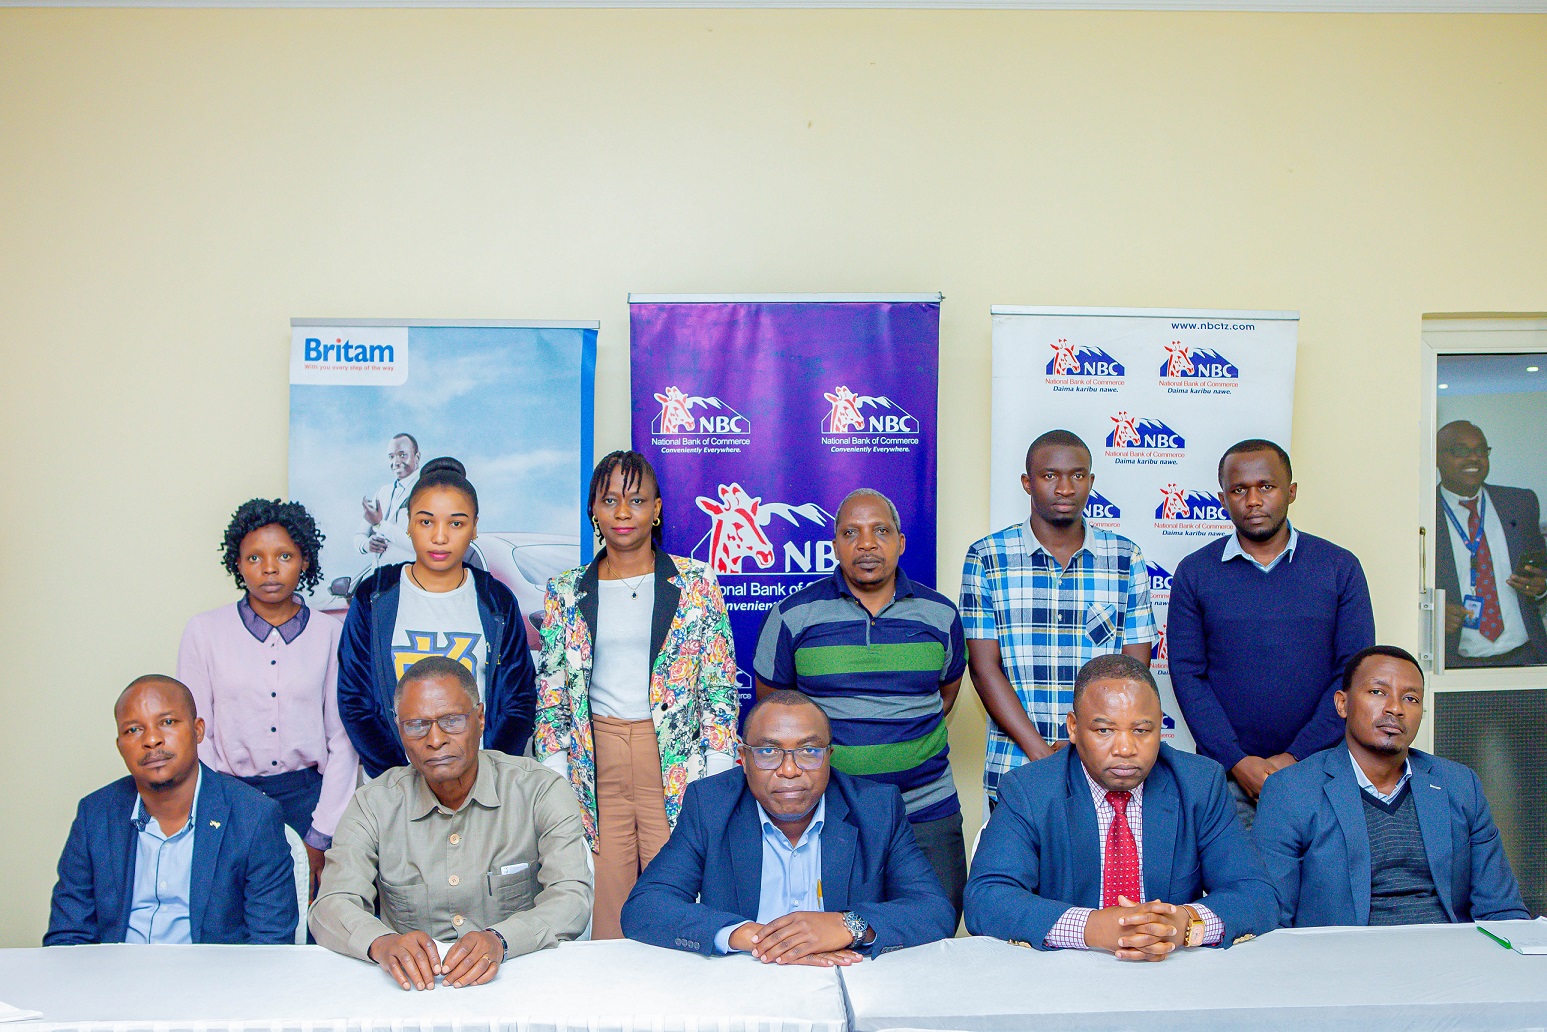 Britam Tanzania Partners With NBC